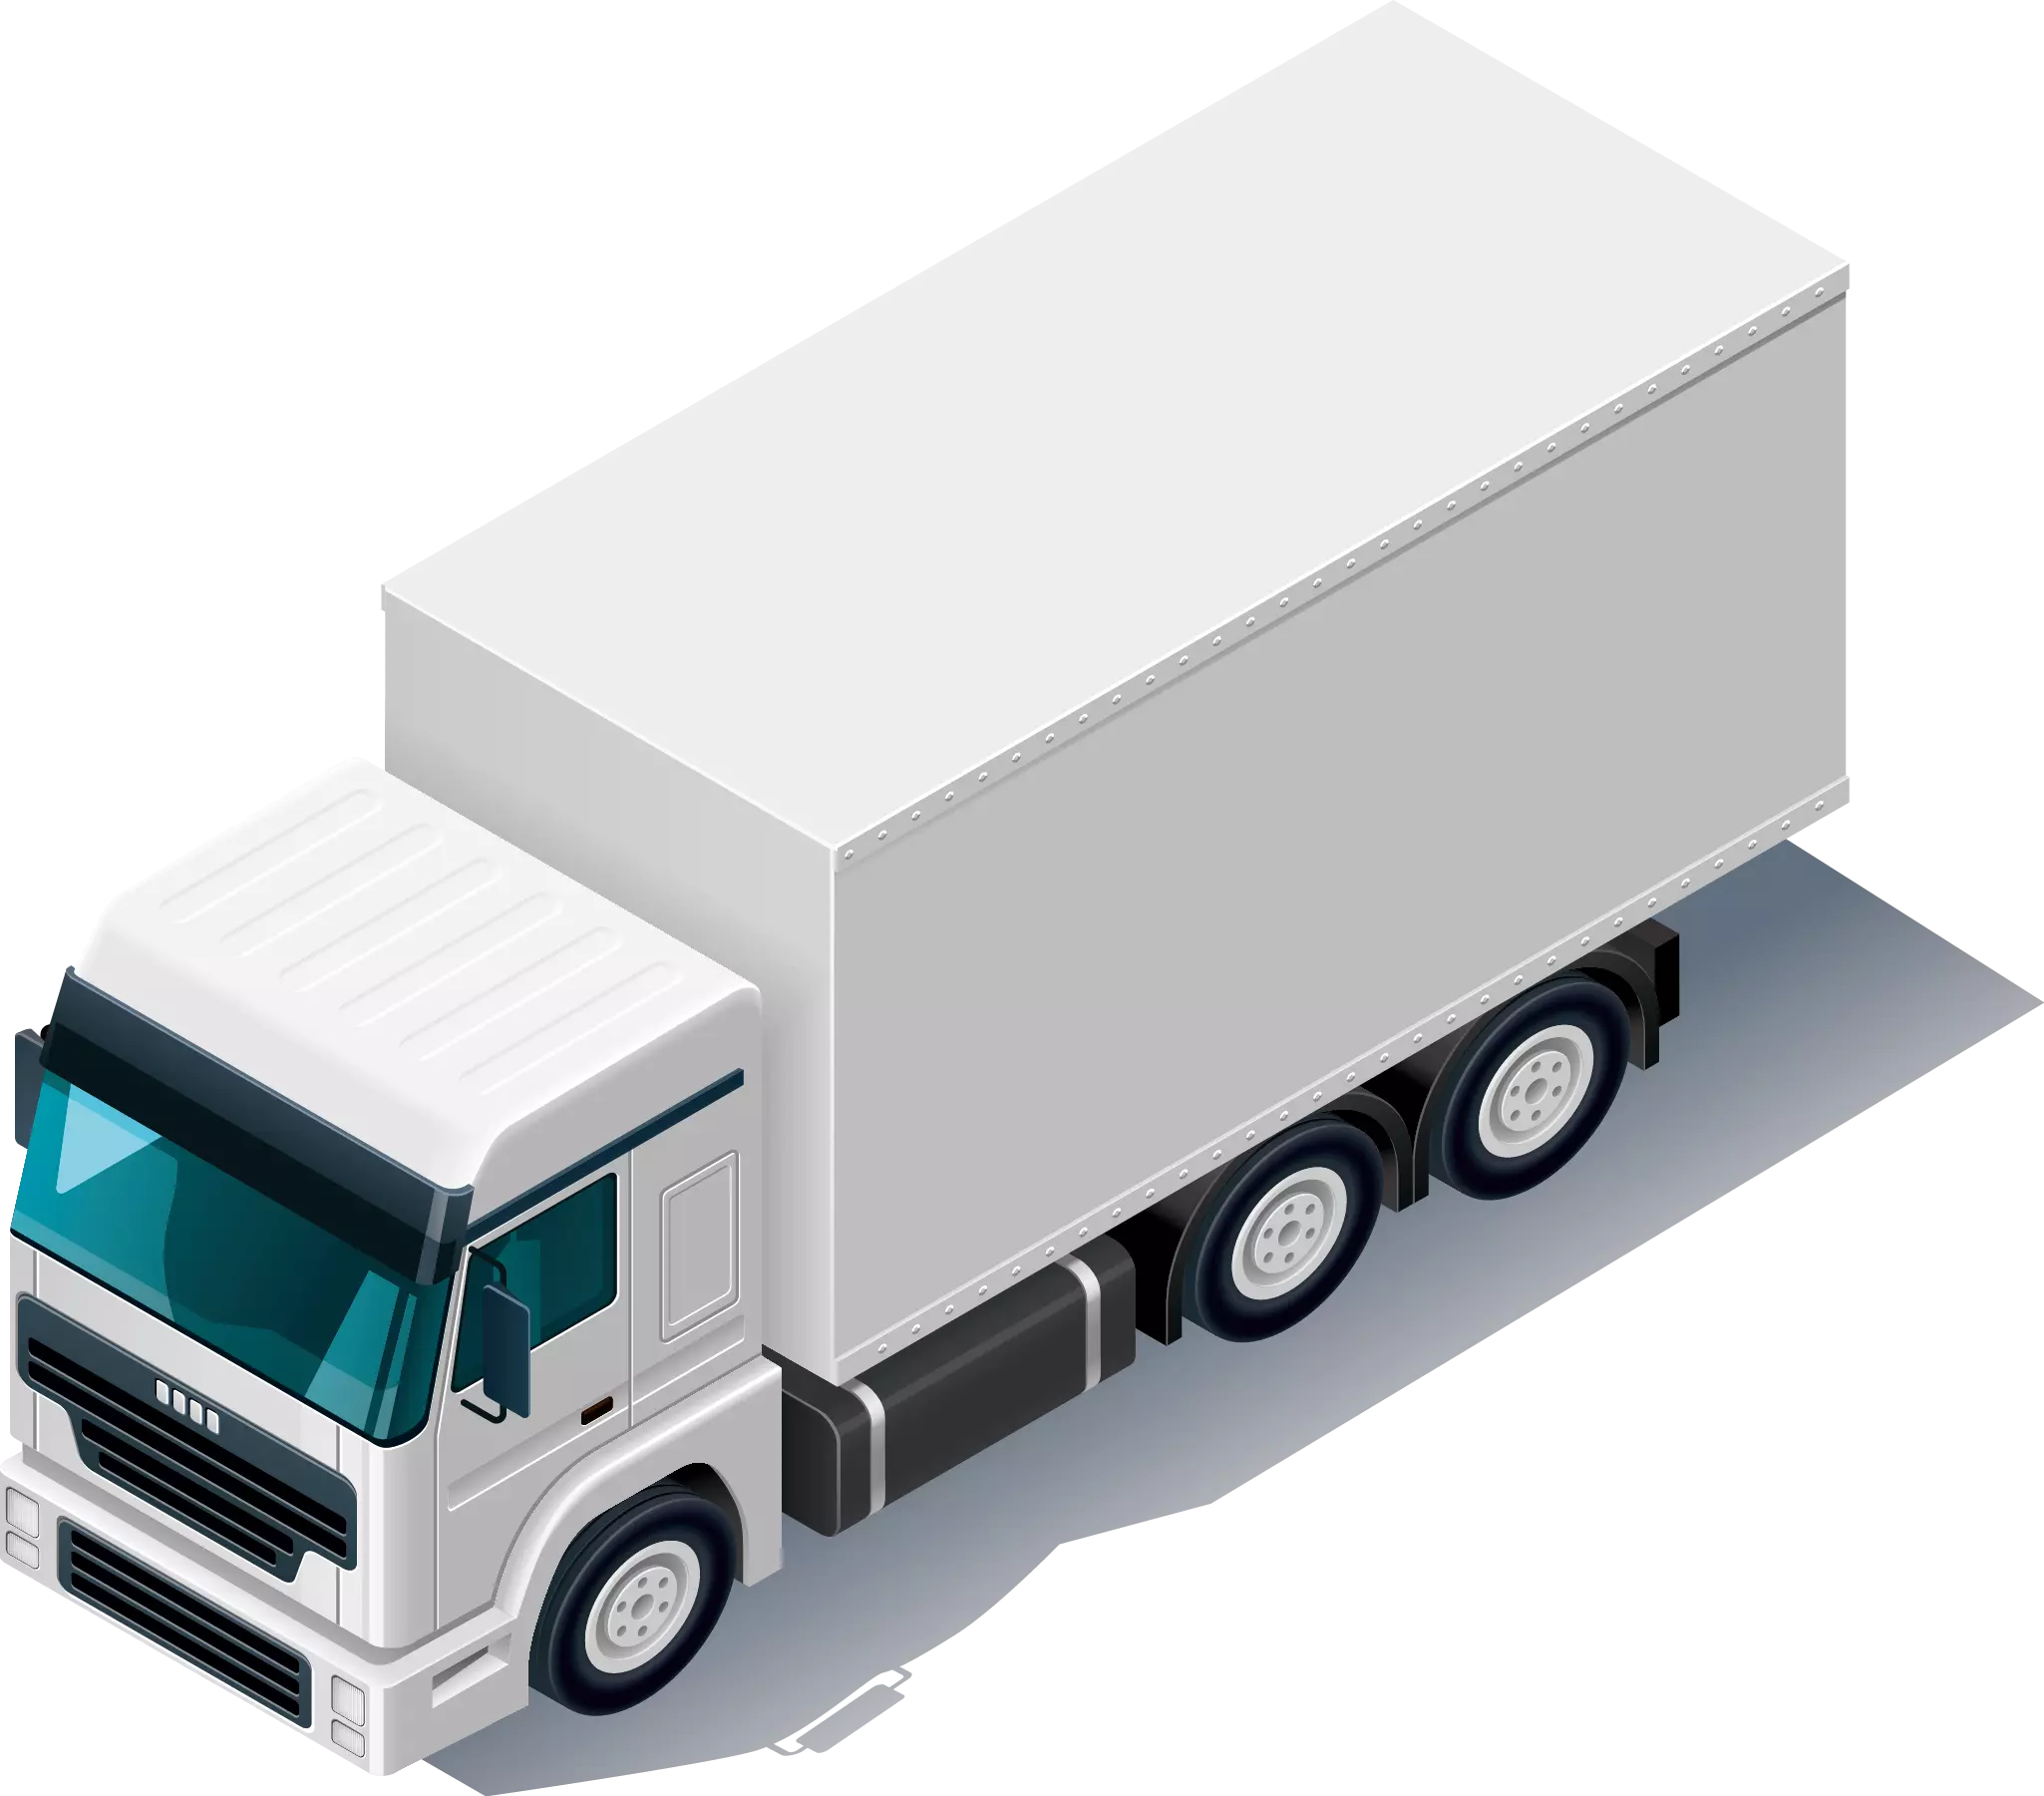 kisspng-pickup-truck-car-truckload-shipping-transport-vector-truck-car-decoration-vector-design-5a988dbd84cbe7.4187948315199471975439